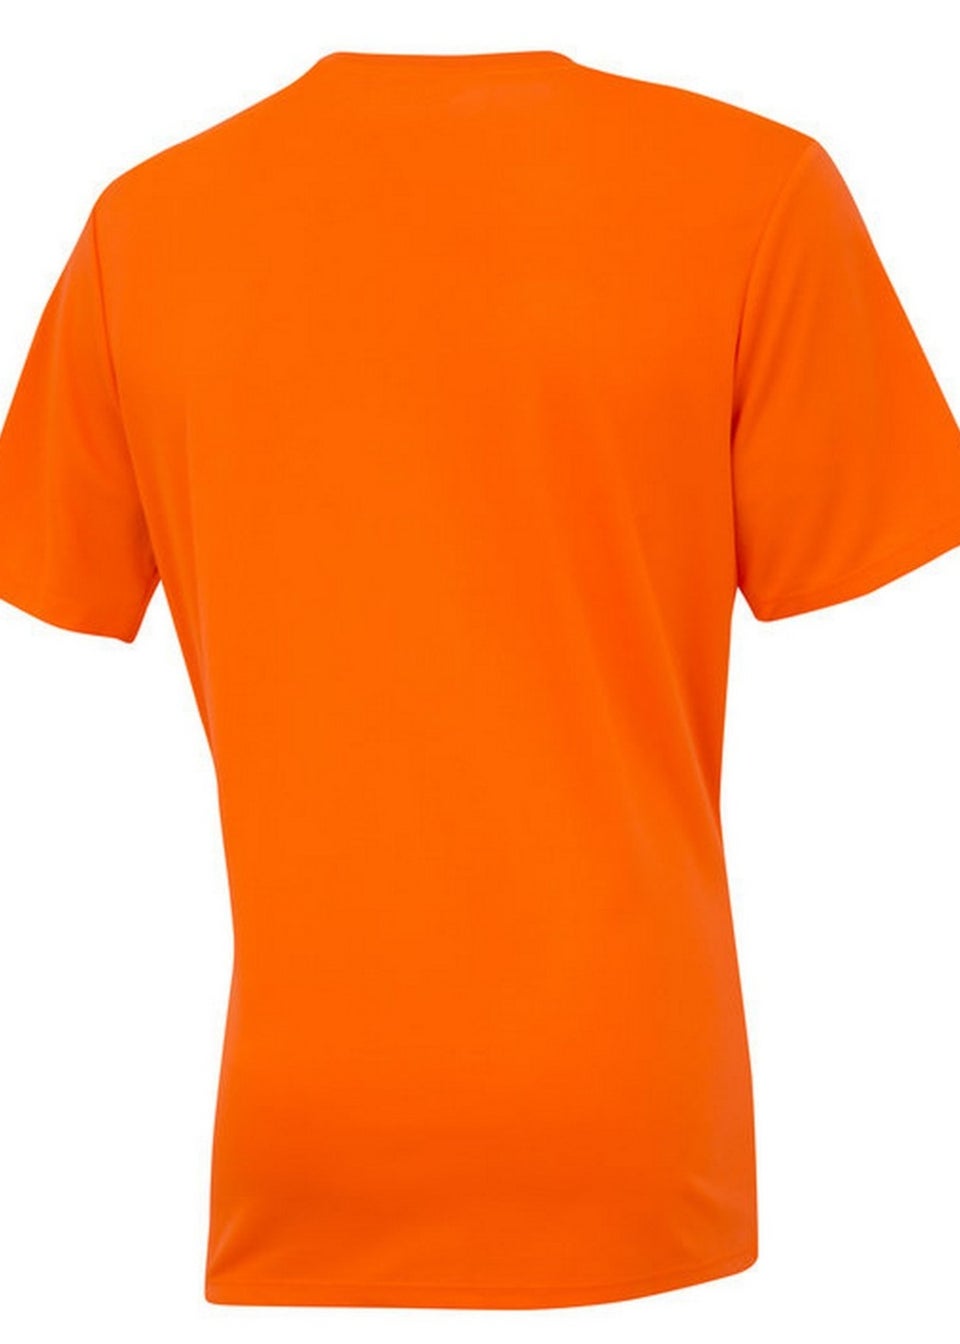 Umbro Orange Club Short-Sleeved Jersey